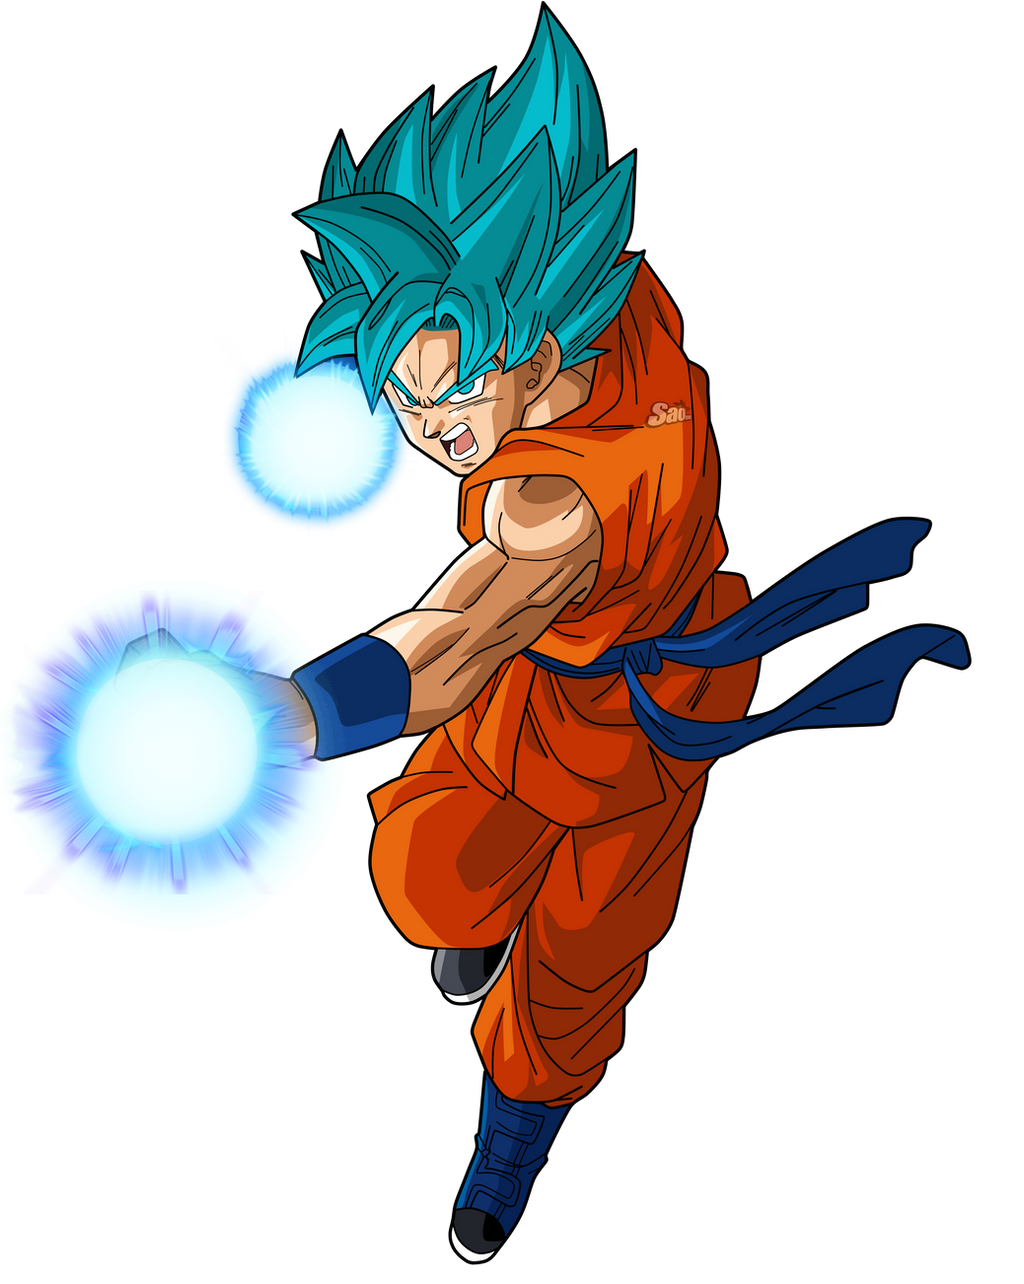 Goku Power 2 by SaoDVD on DeviantArt